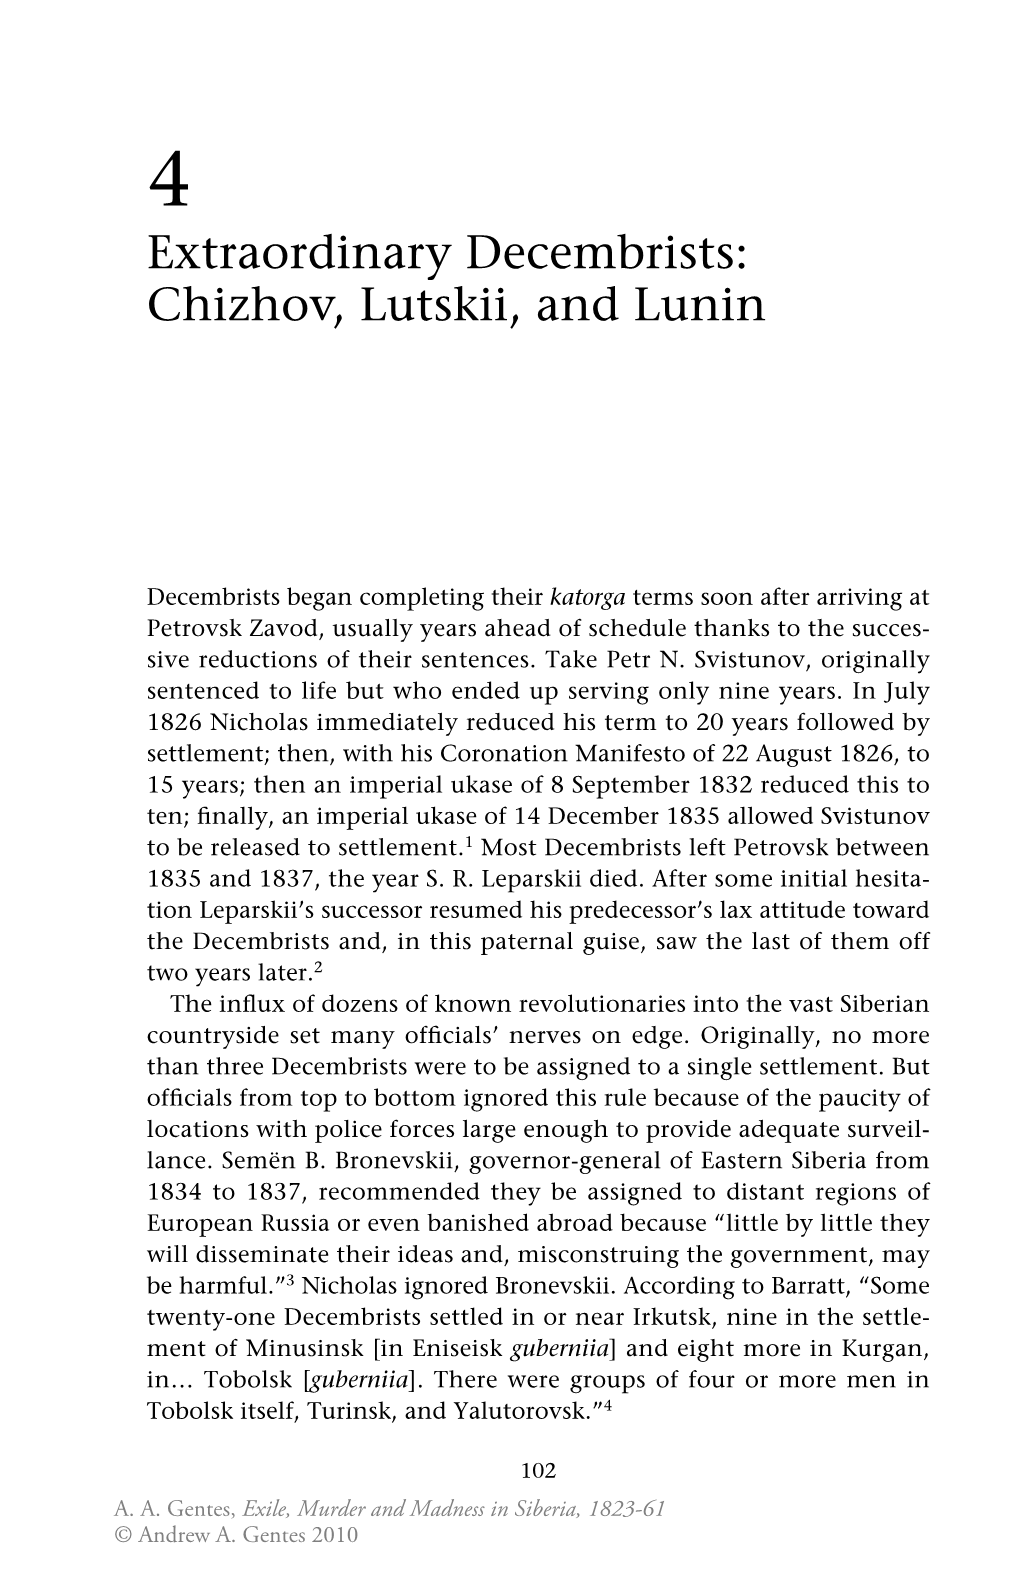 Extraordinary Decembrists: Chizhov, Lutskii, and Lunin